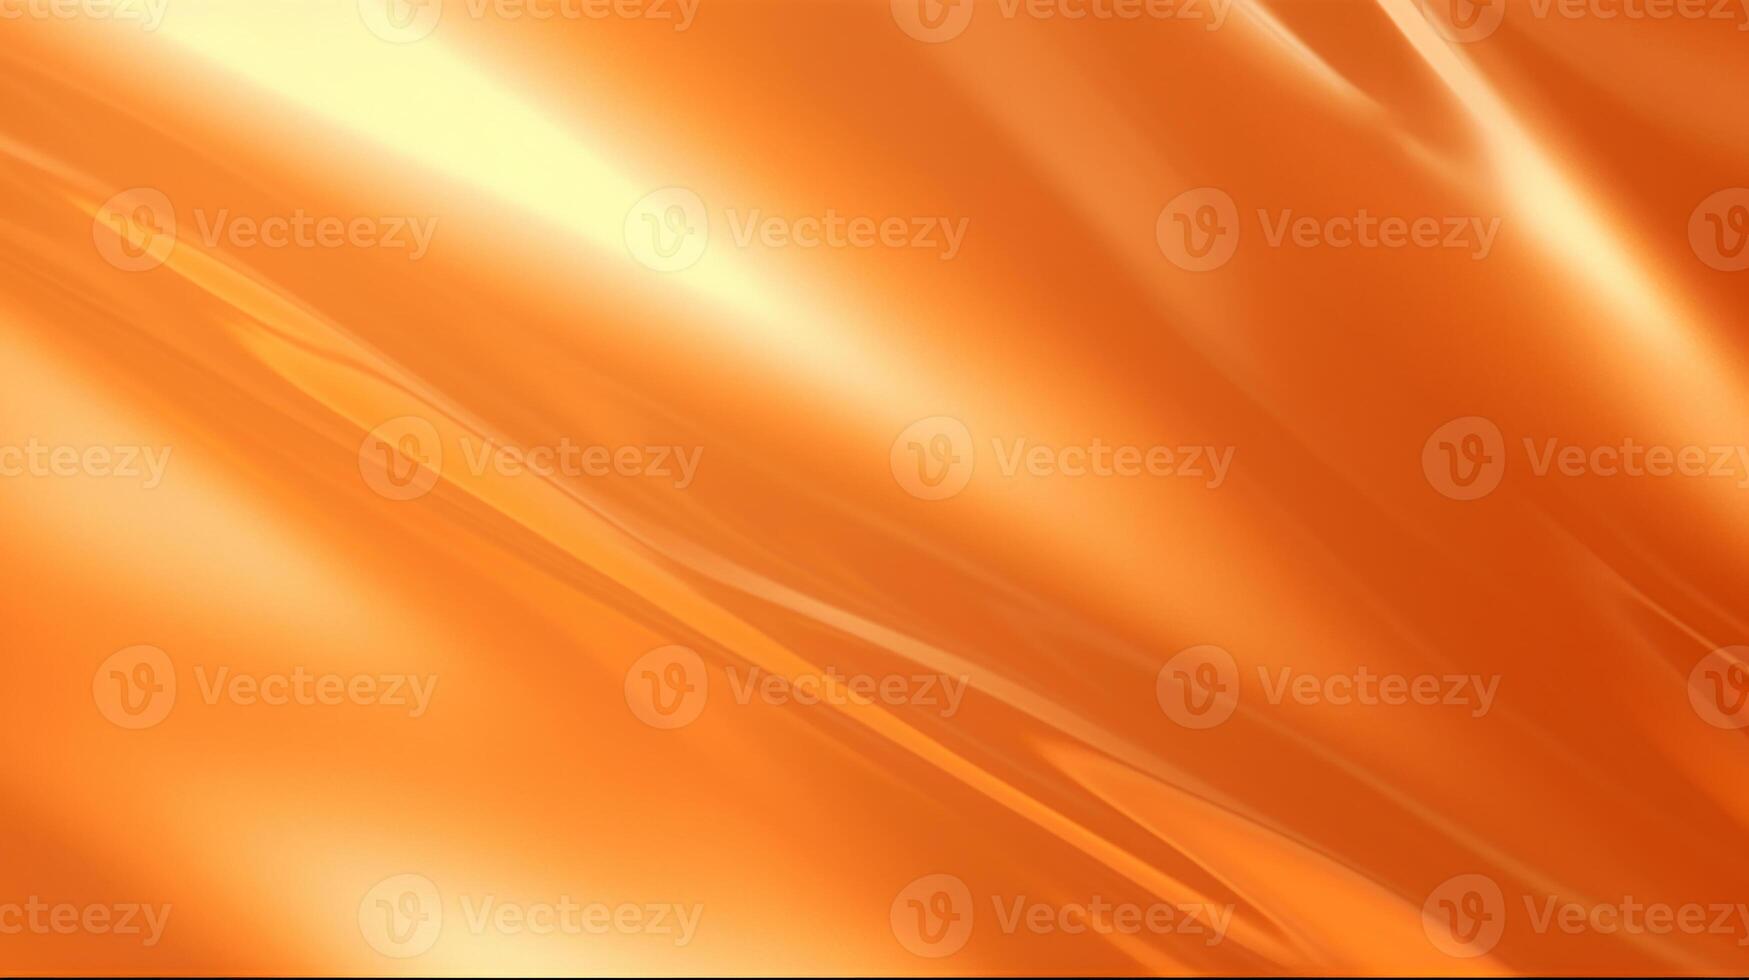 Glistening light orange color simple background texture. photo